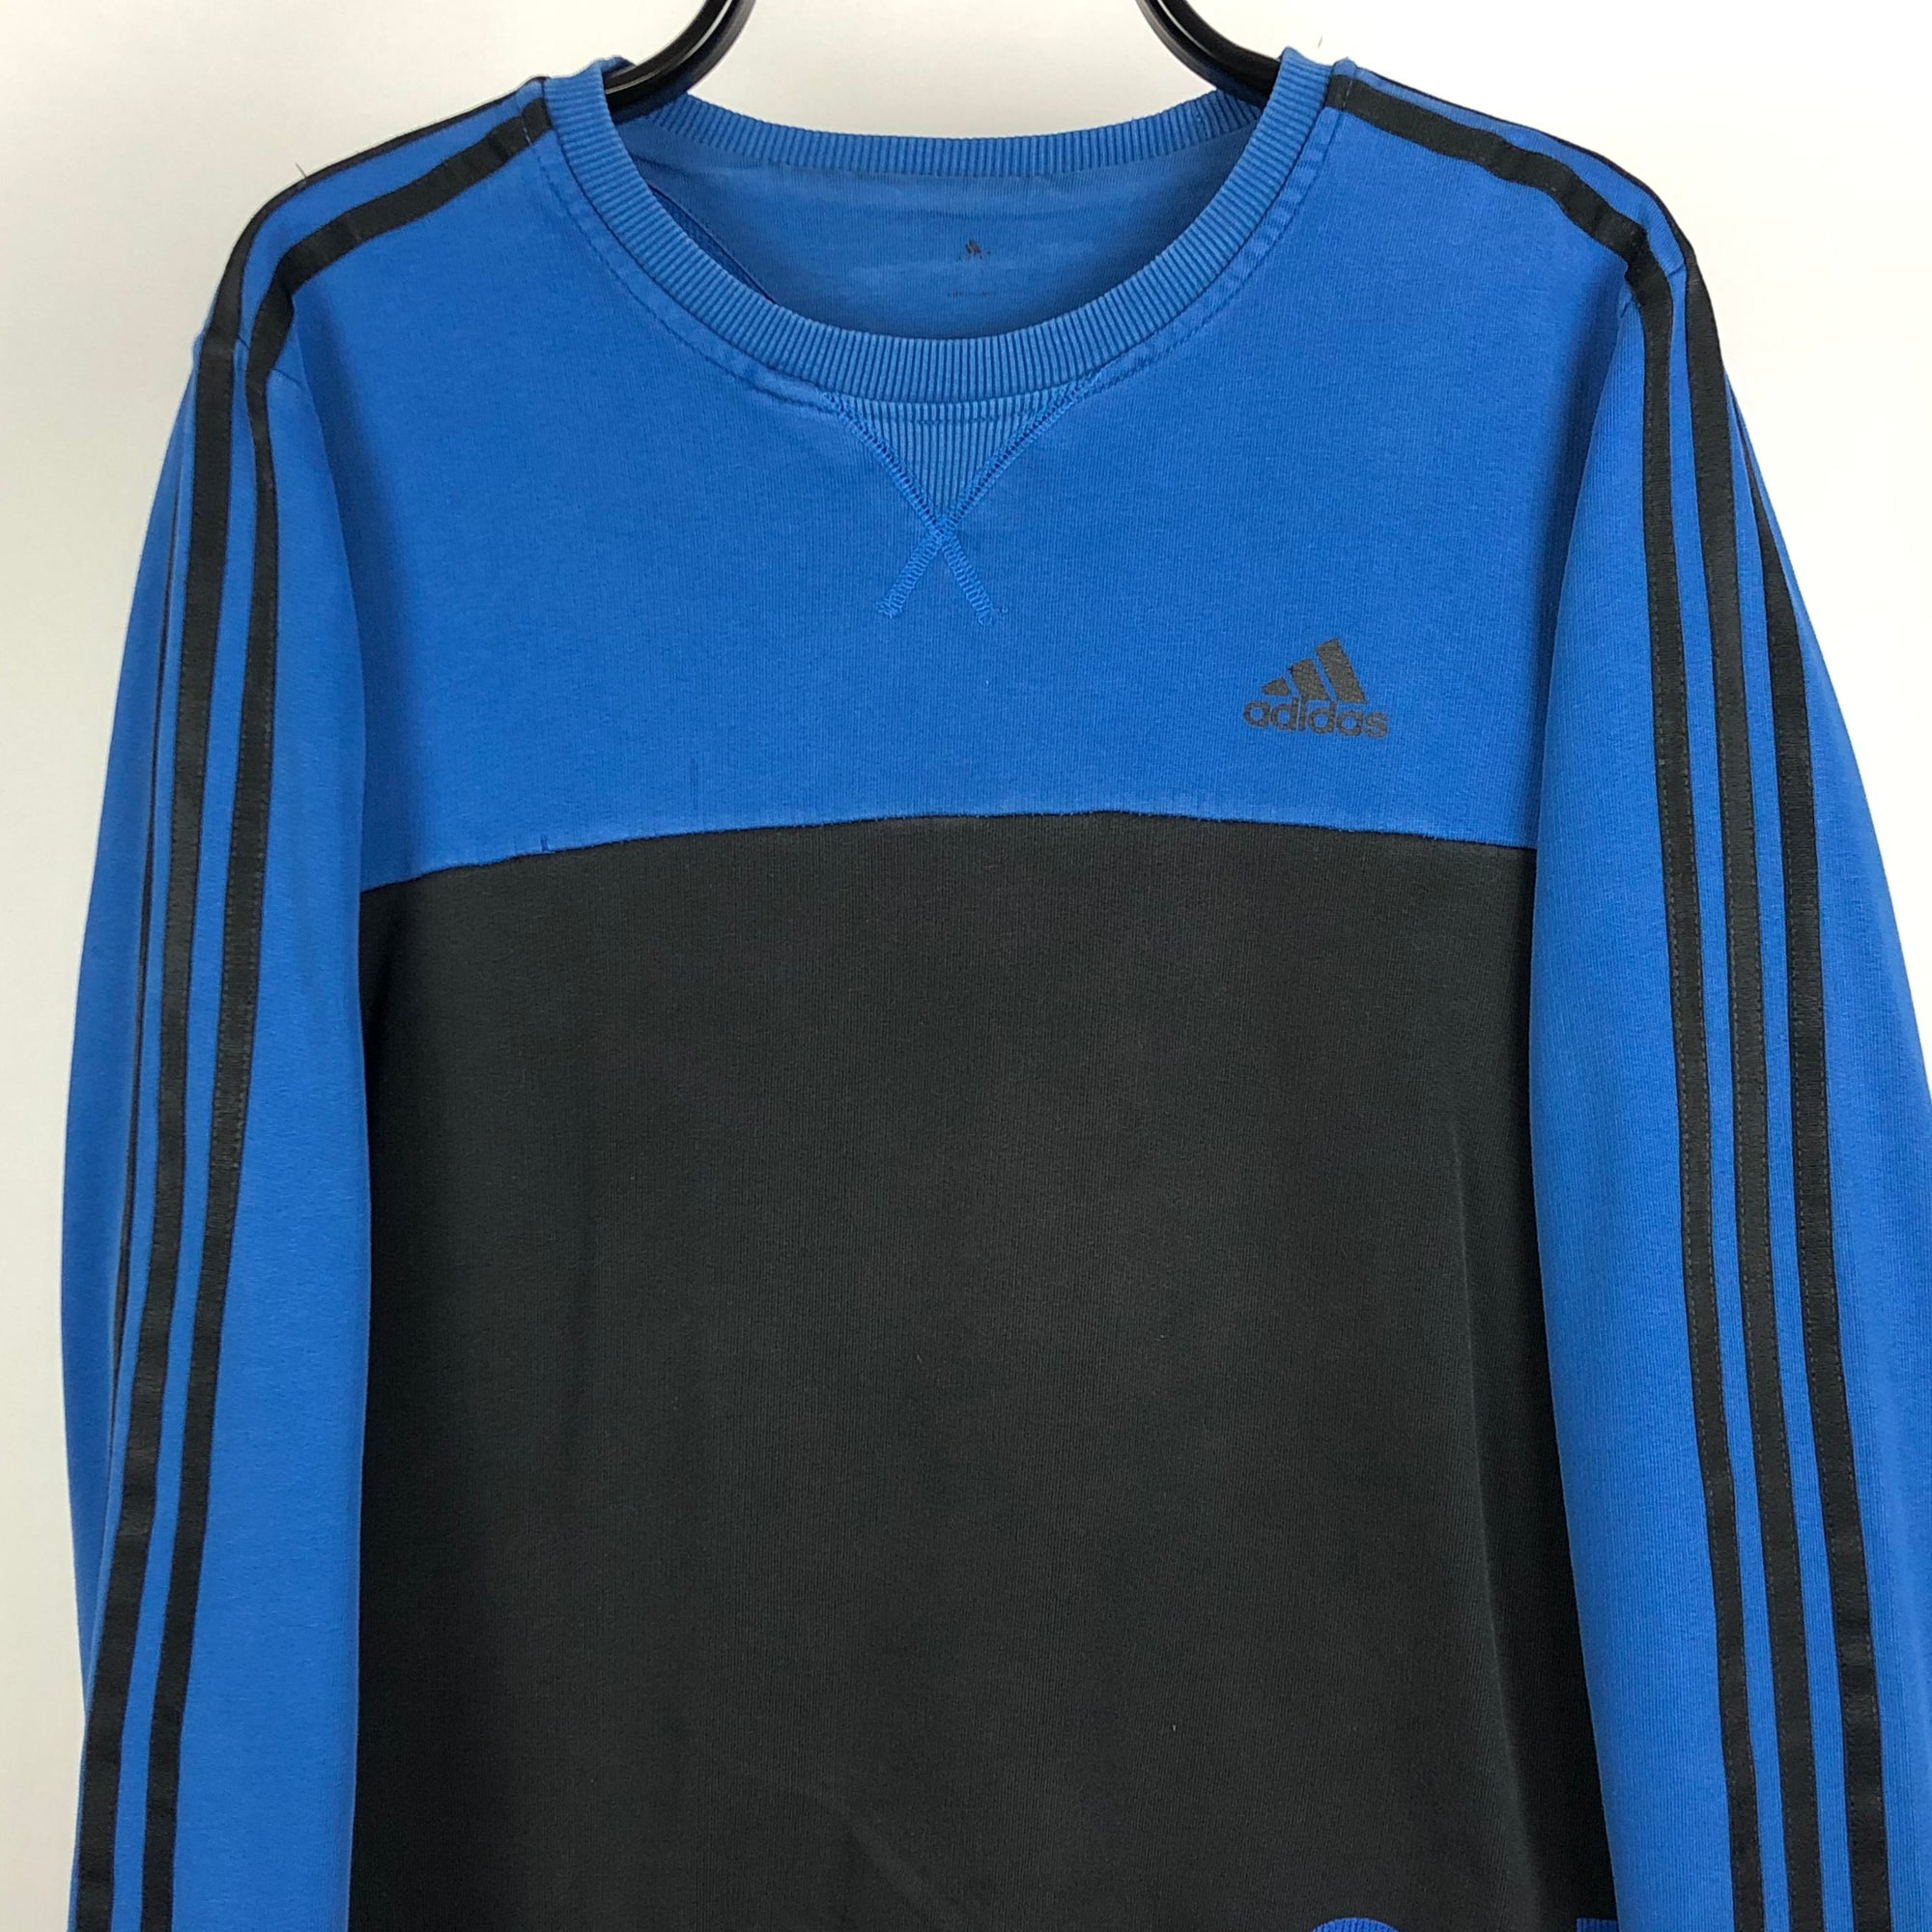 Adidas Small Logo Sweatshirt in Blue/Black - Men's Small/Women's Medium